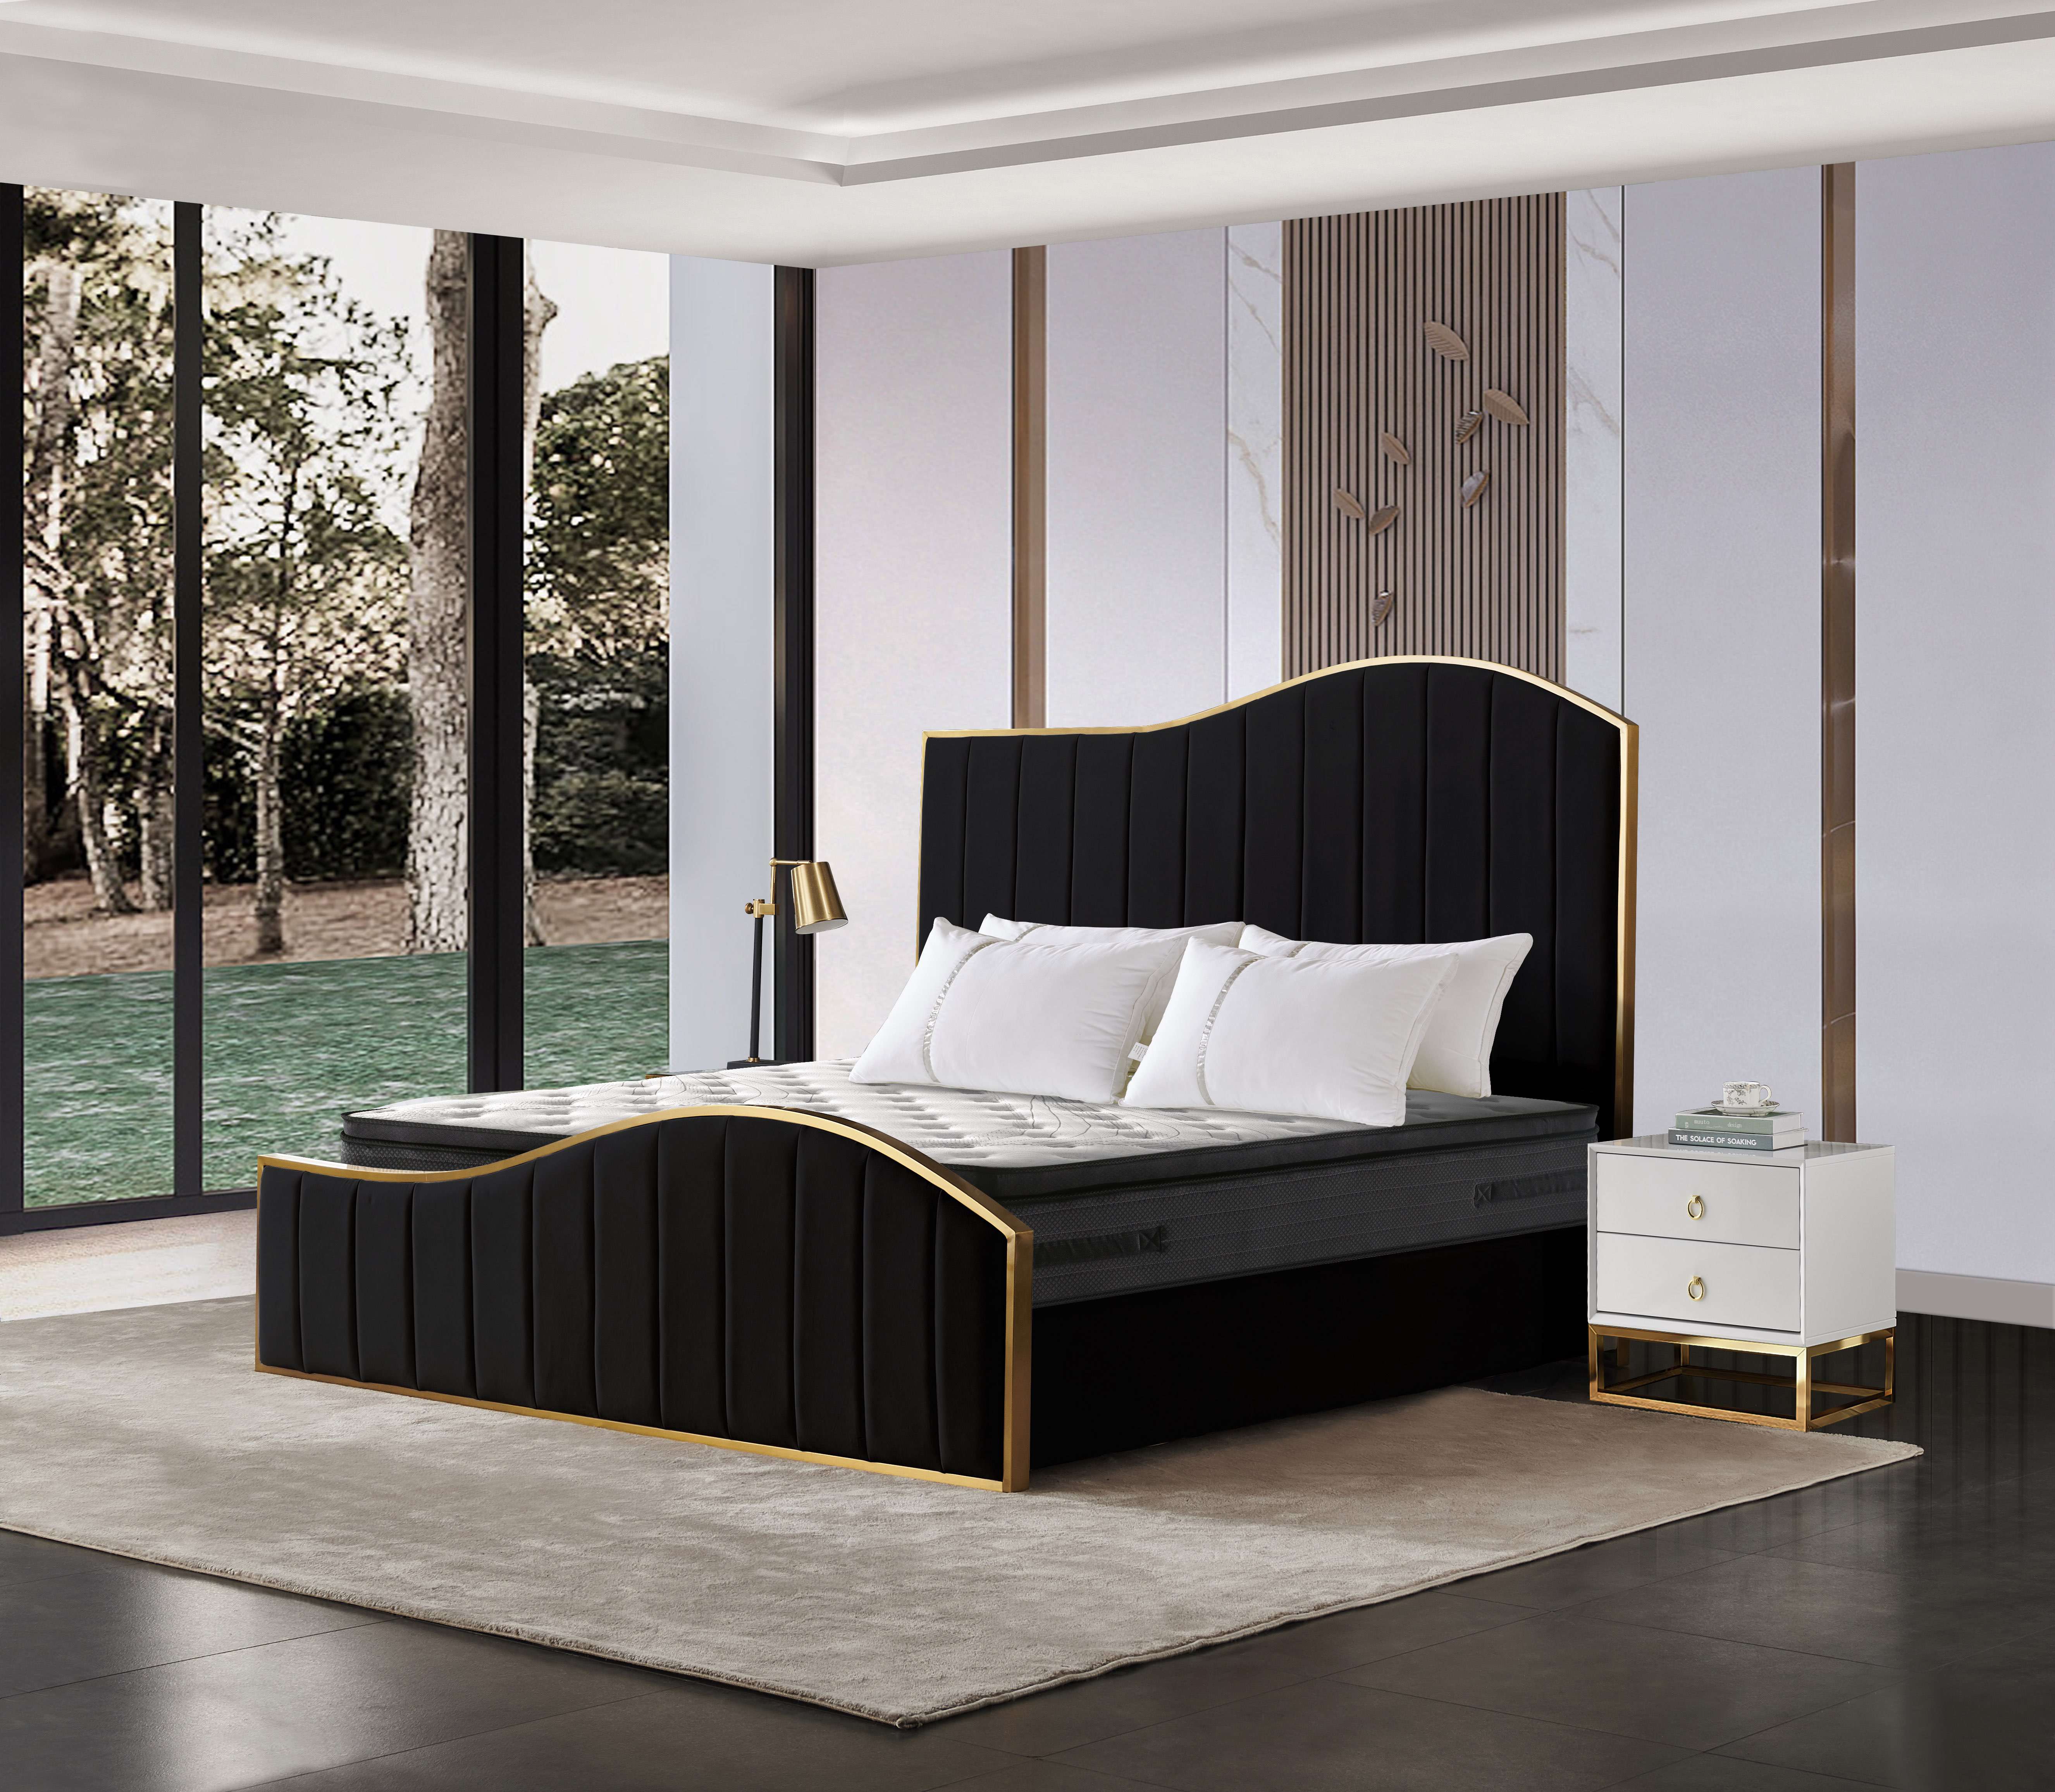 Nightstand and Bed Bedroom Set - LEIZI Furniture